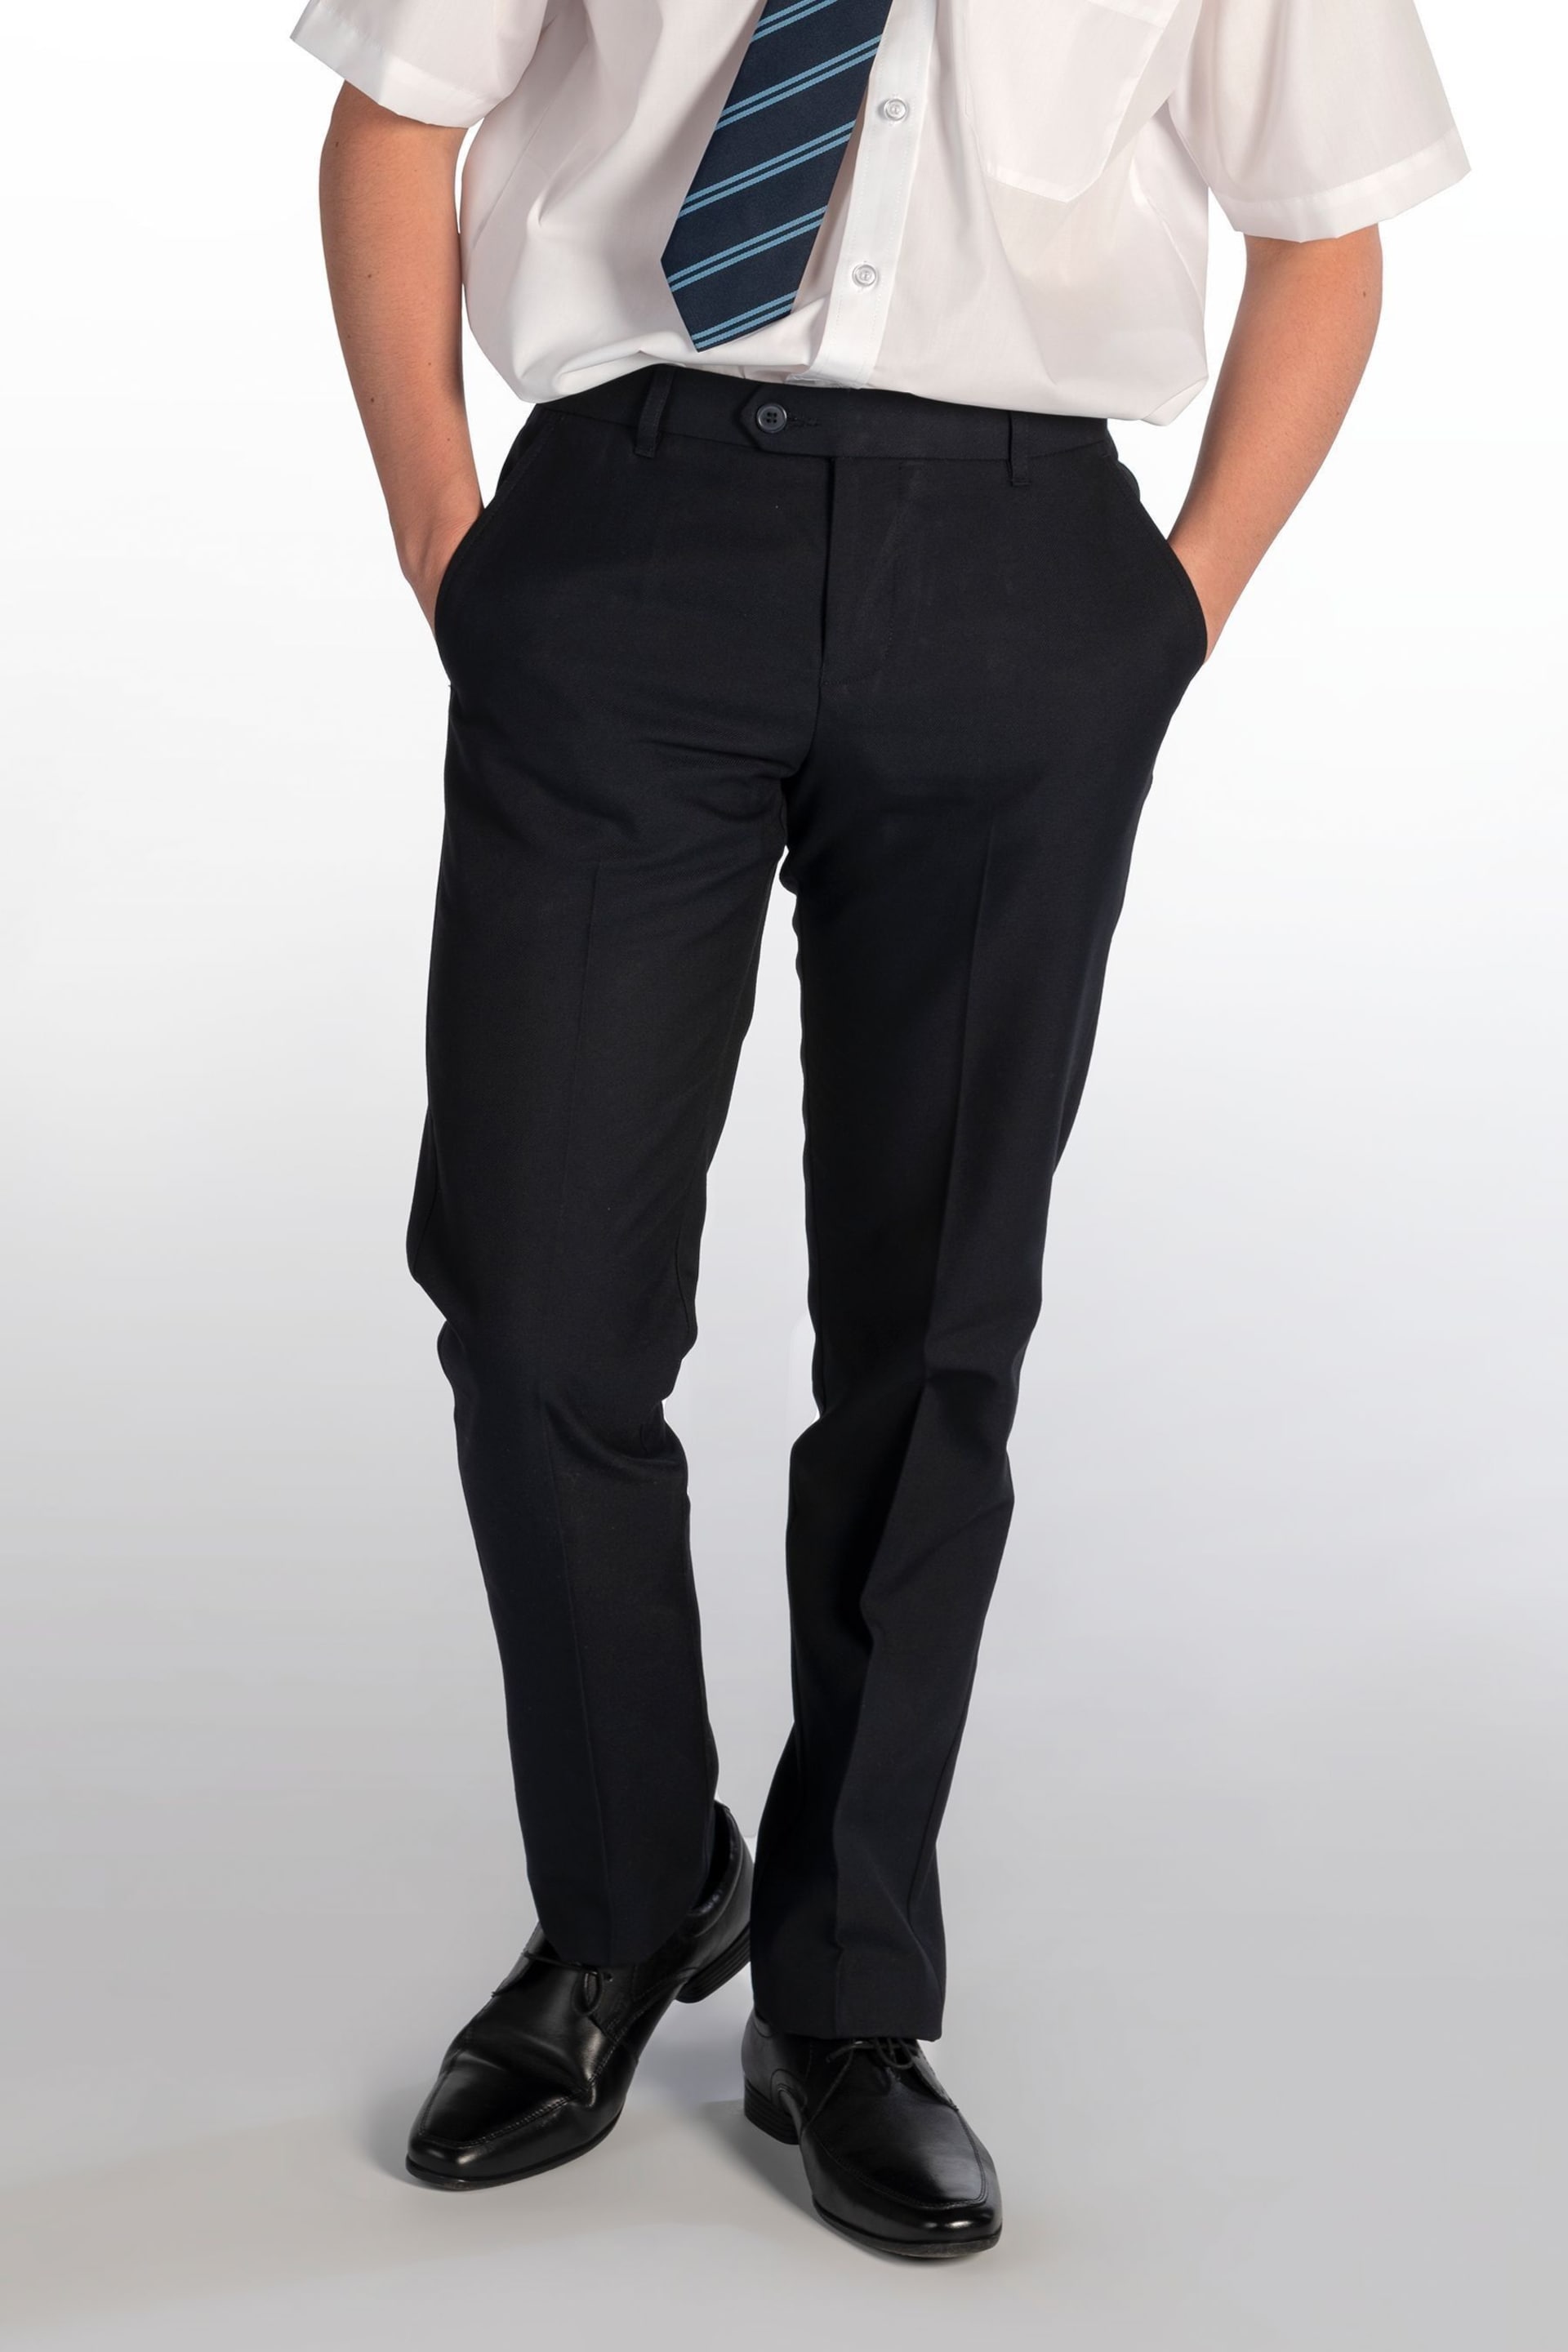 Trutex Senior Boys Navy Slim Leg School Trousers - Image 1 of 2